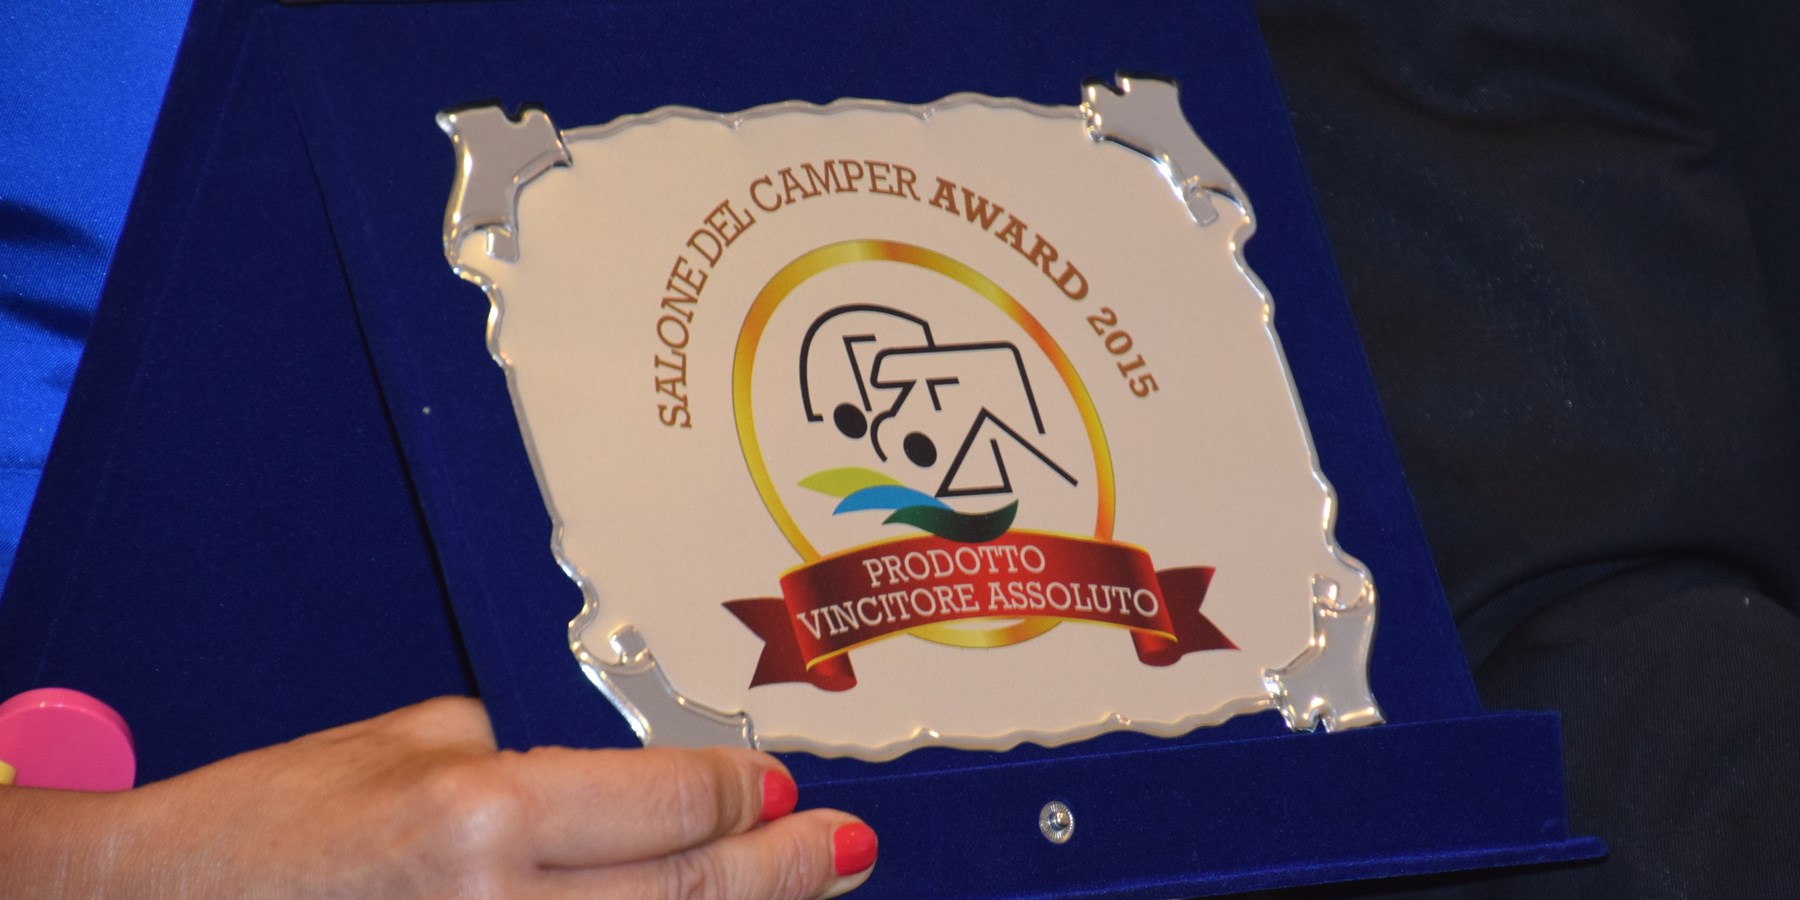 Roller Team winner of the Salone del Camper Award 2015